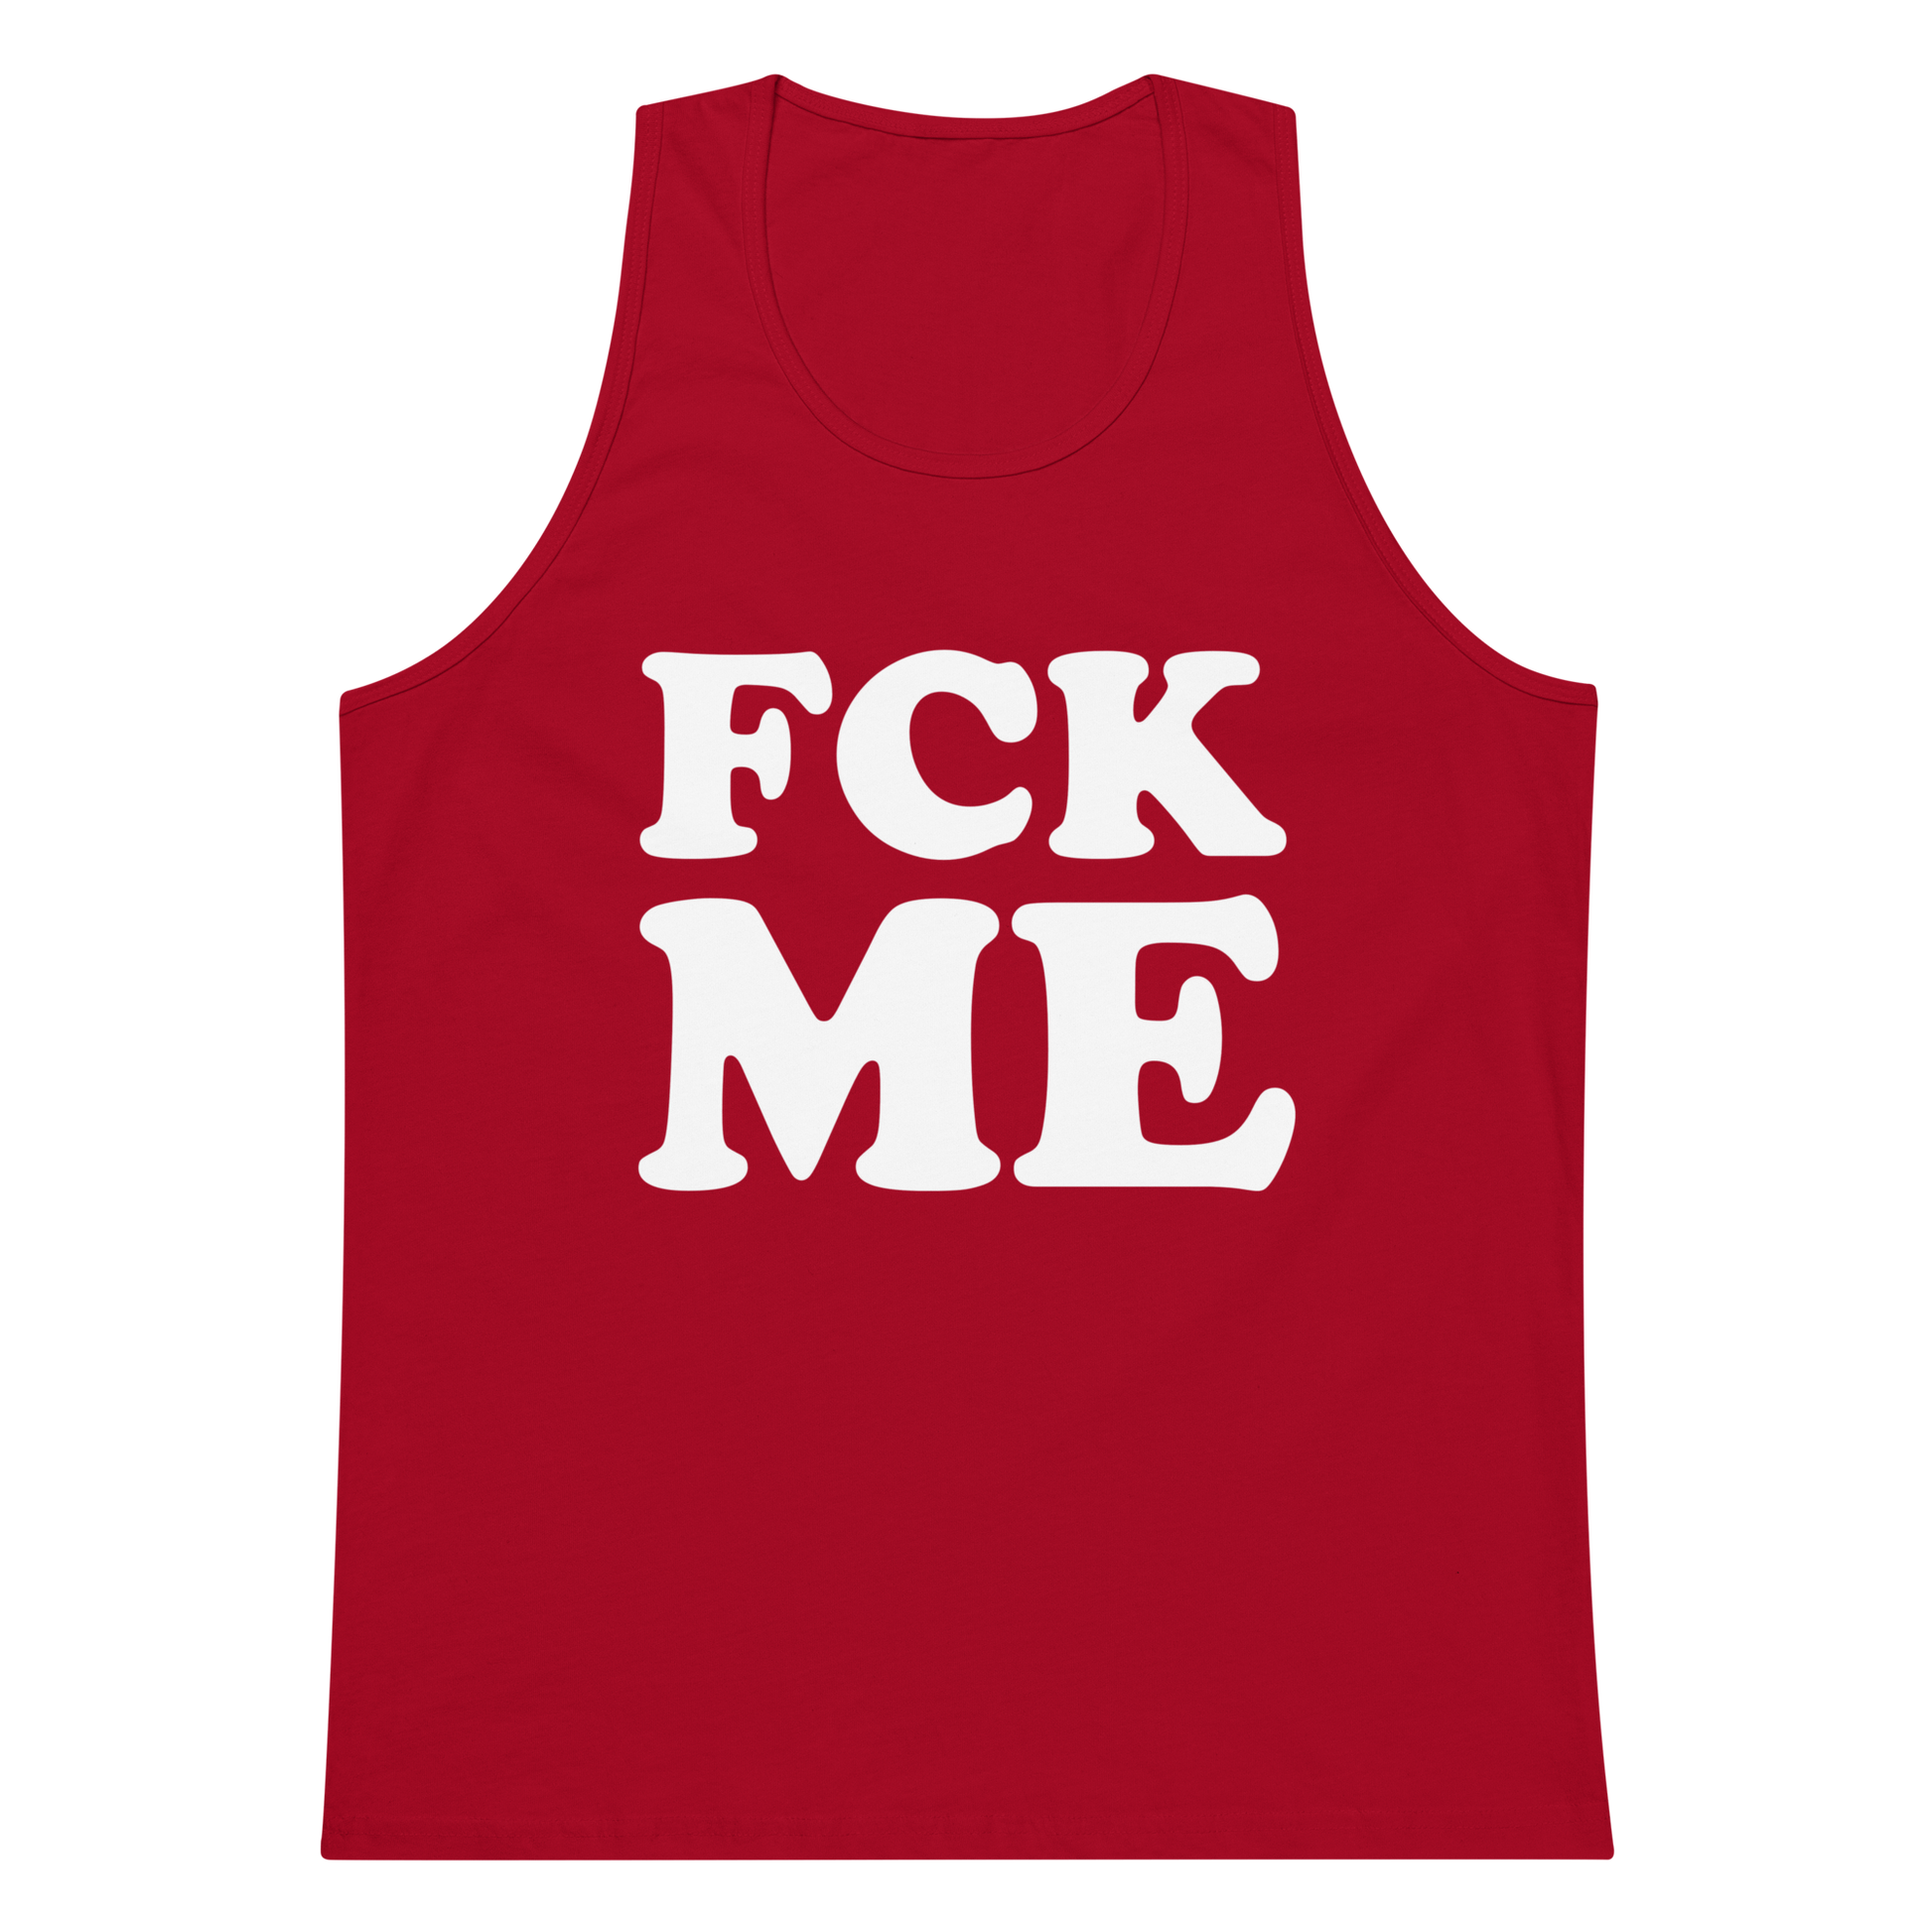 FCK Me Tank Top - Red